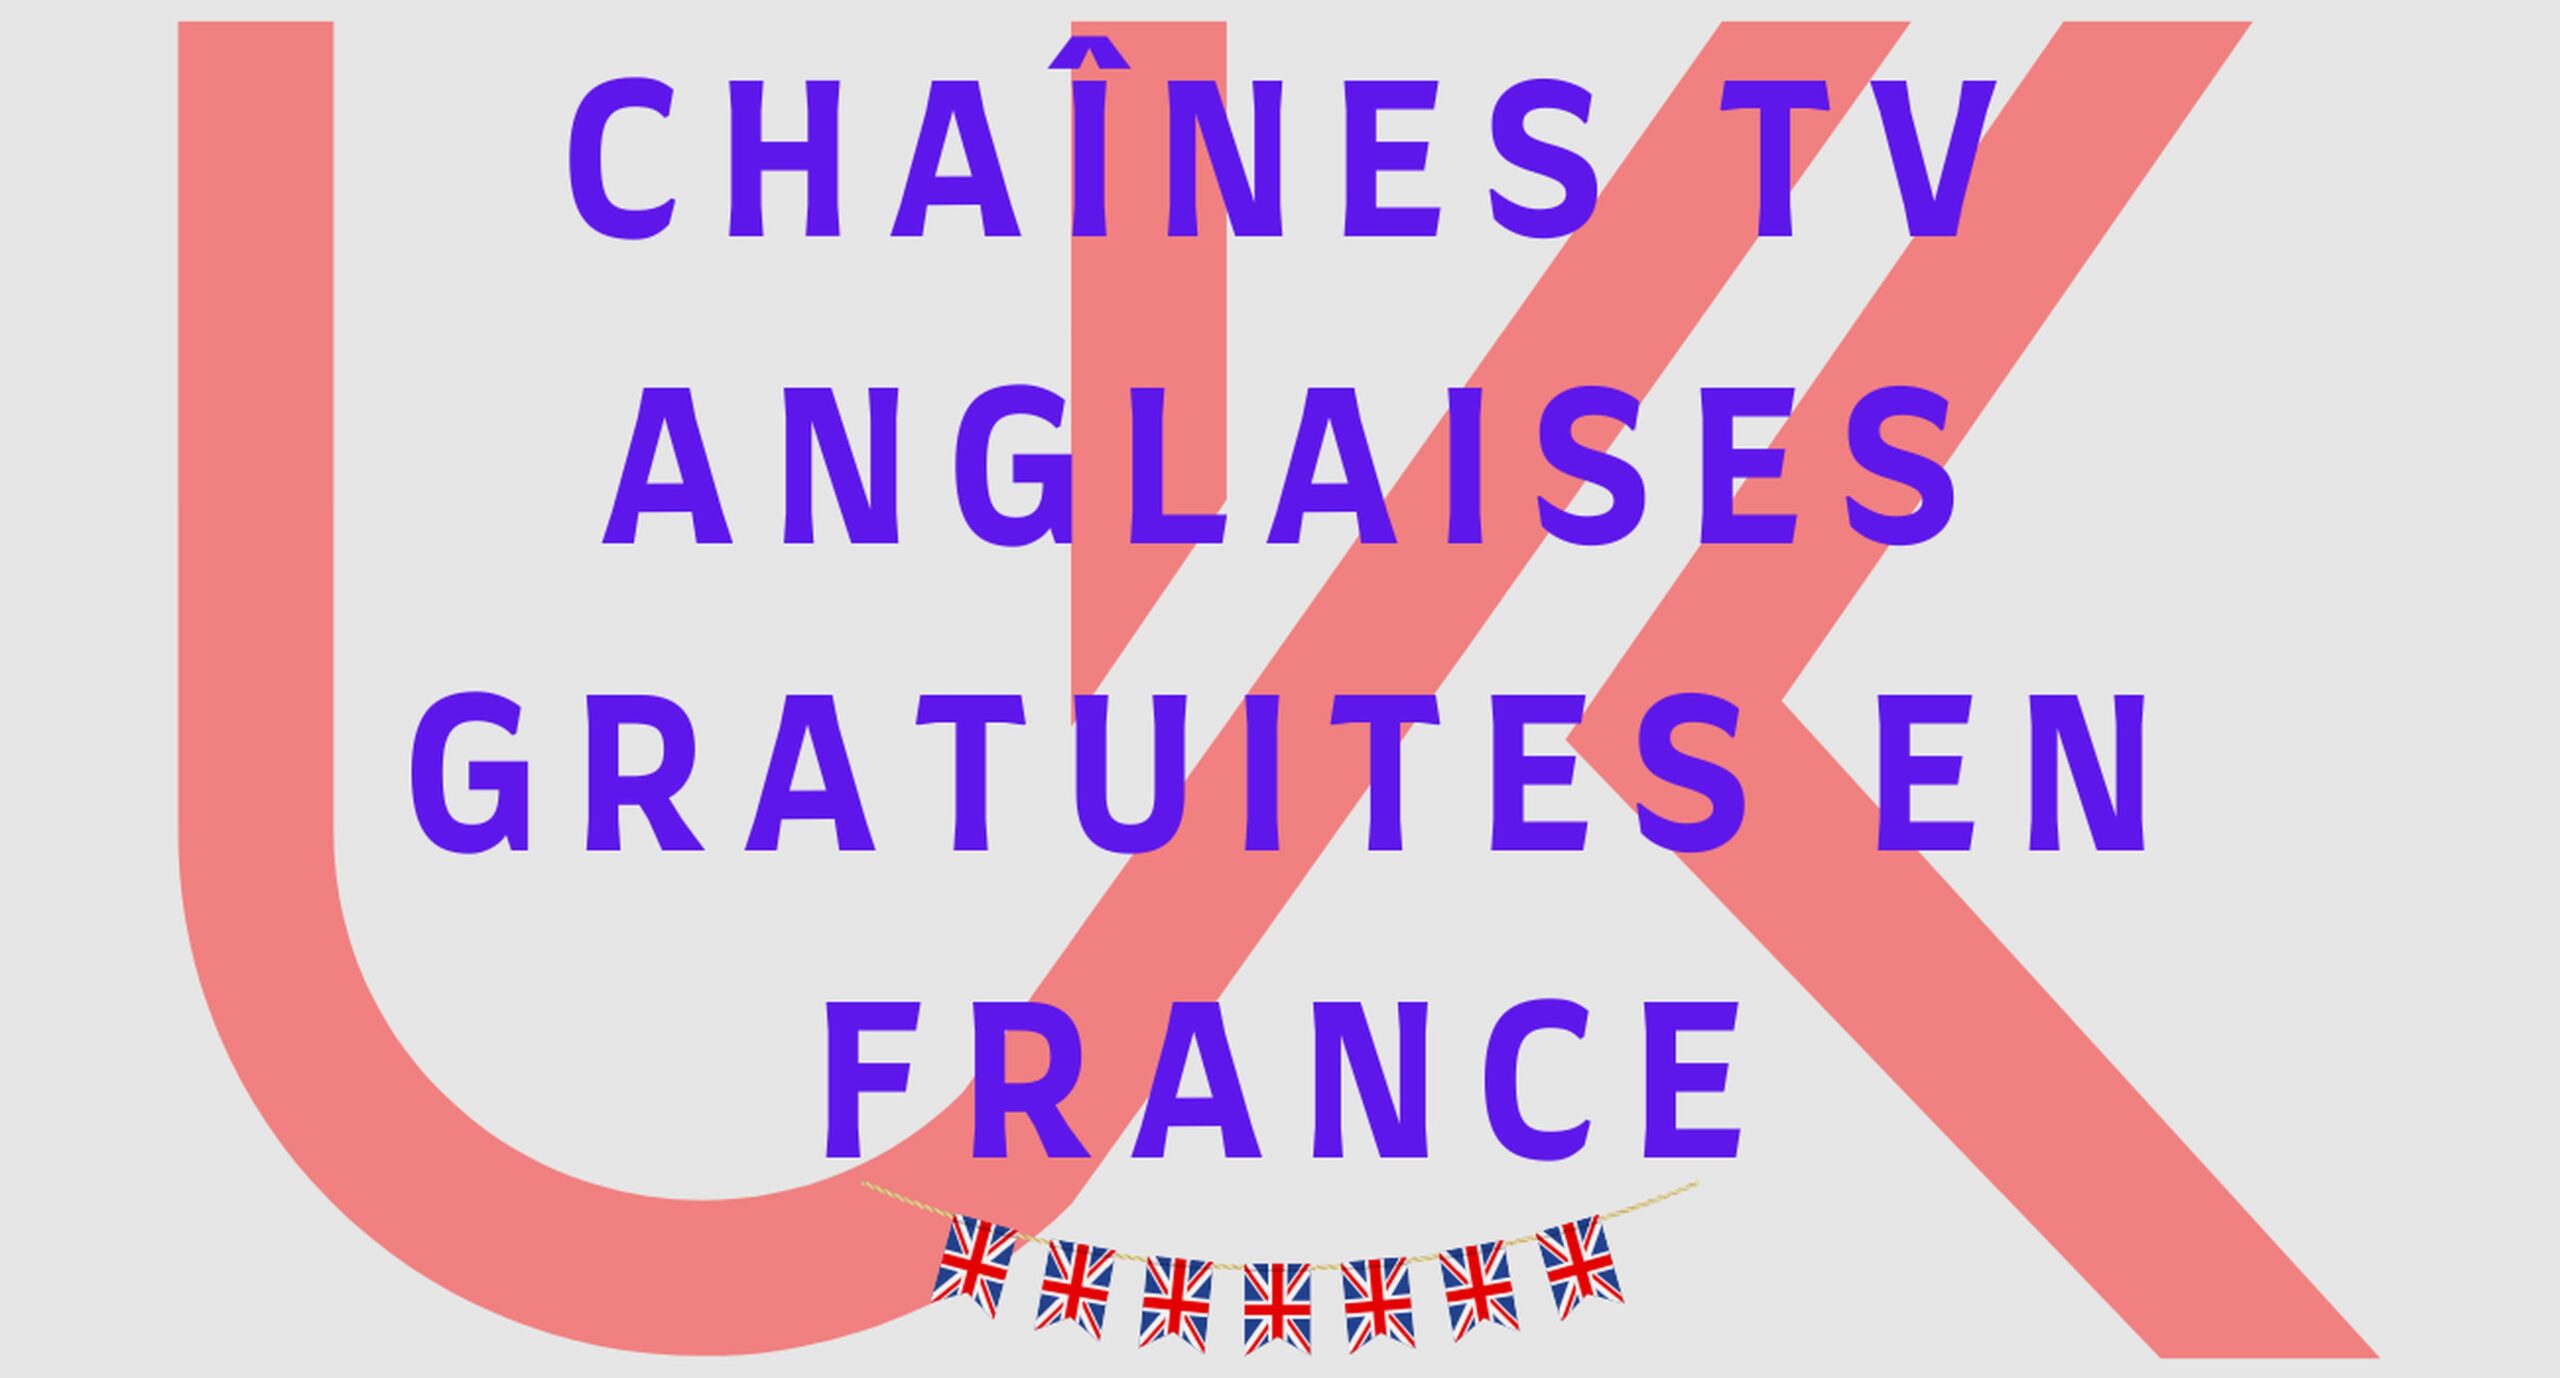 Chaînes TV Anglaises gratuites en France - 55 Chaînes TV disponibles 1